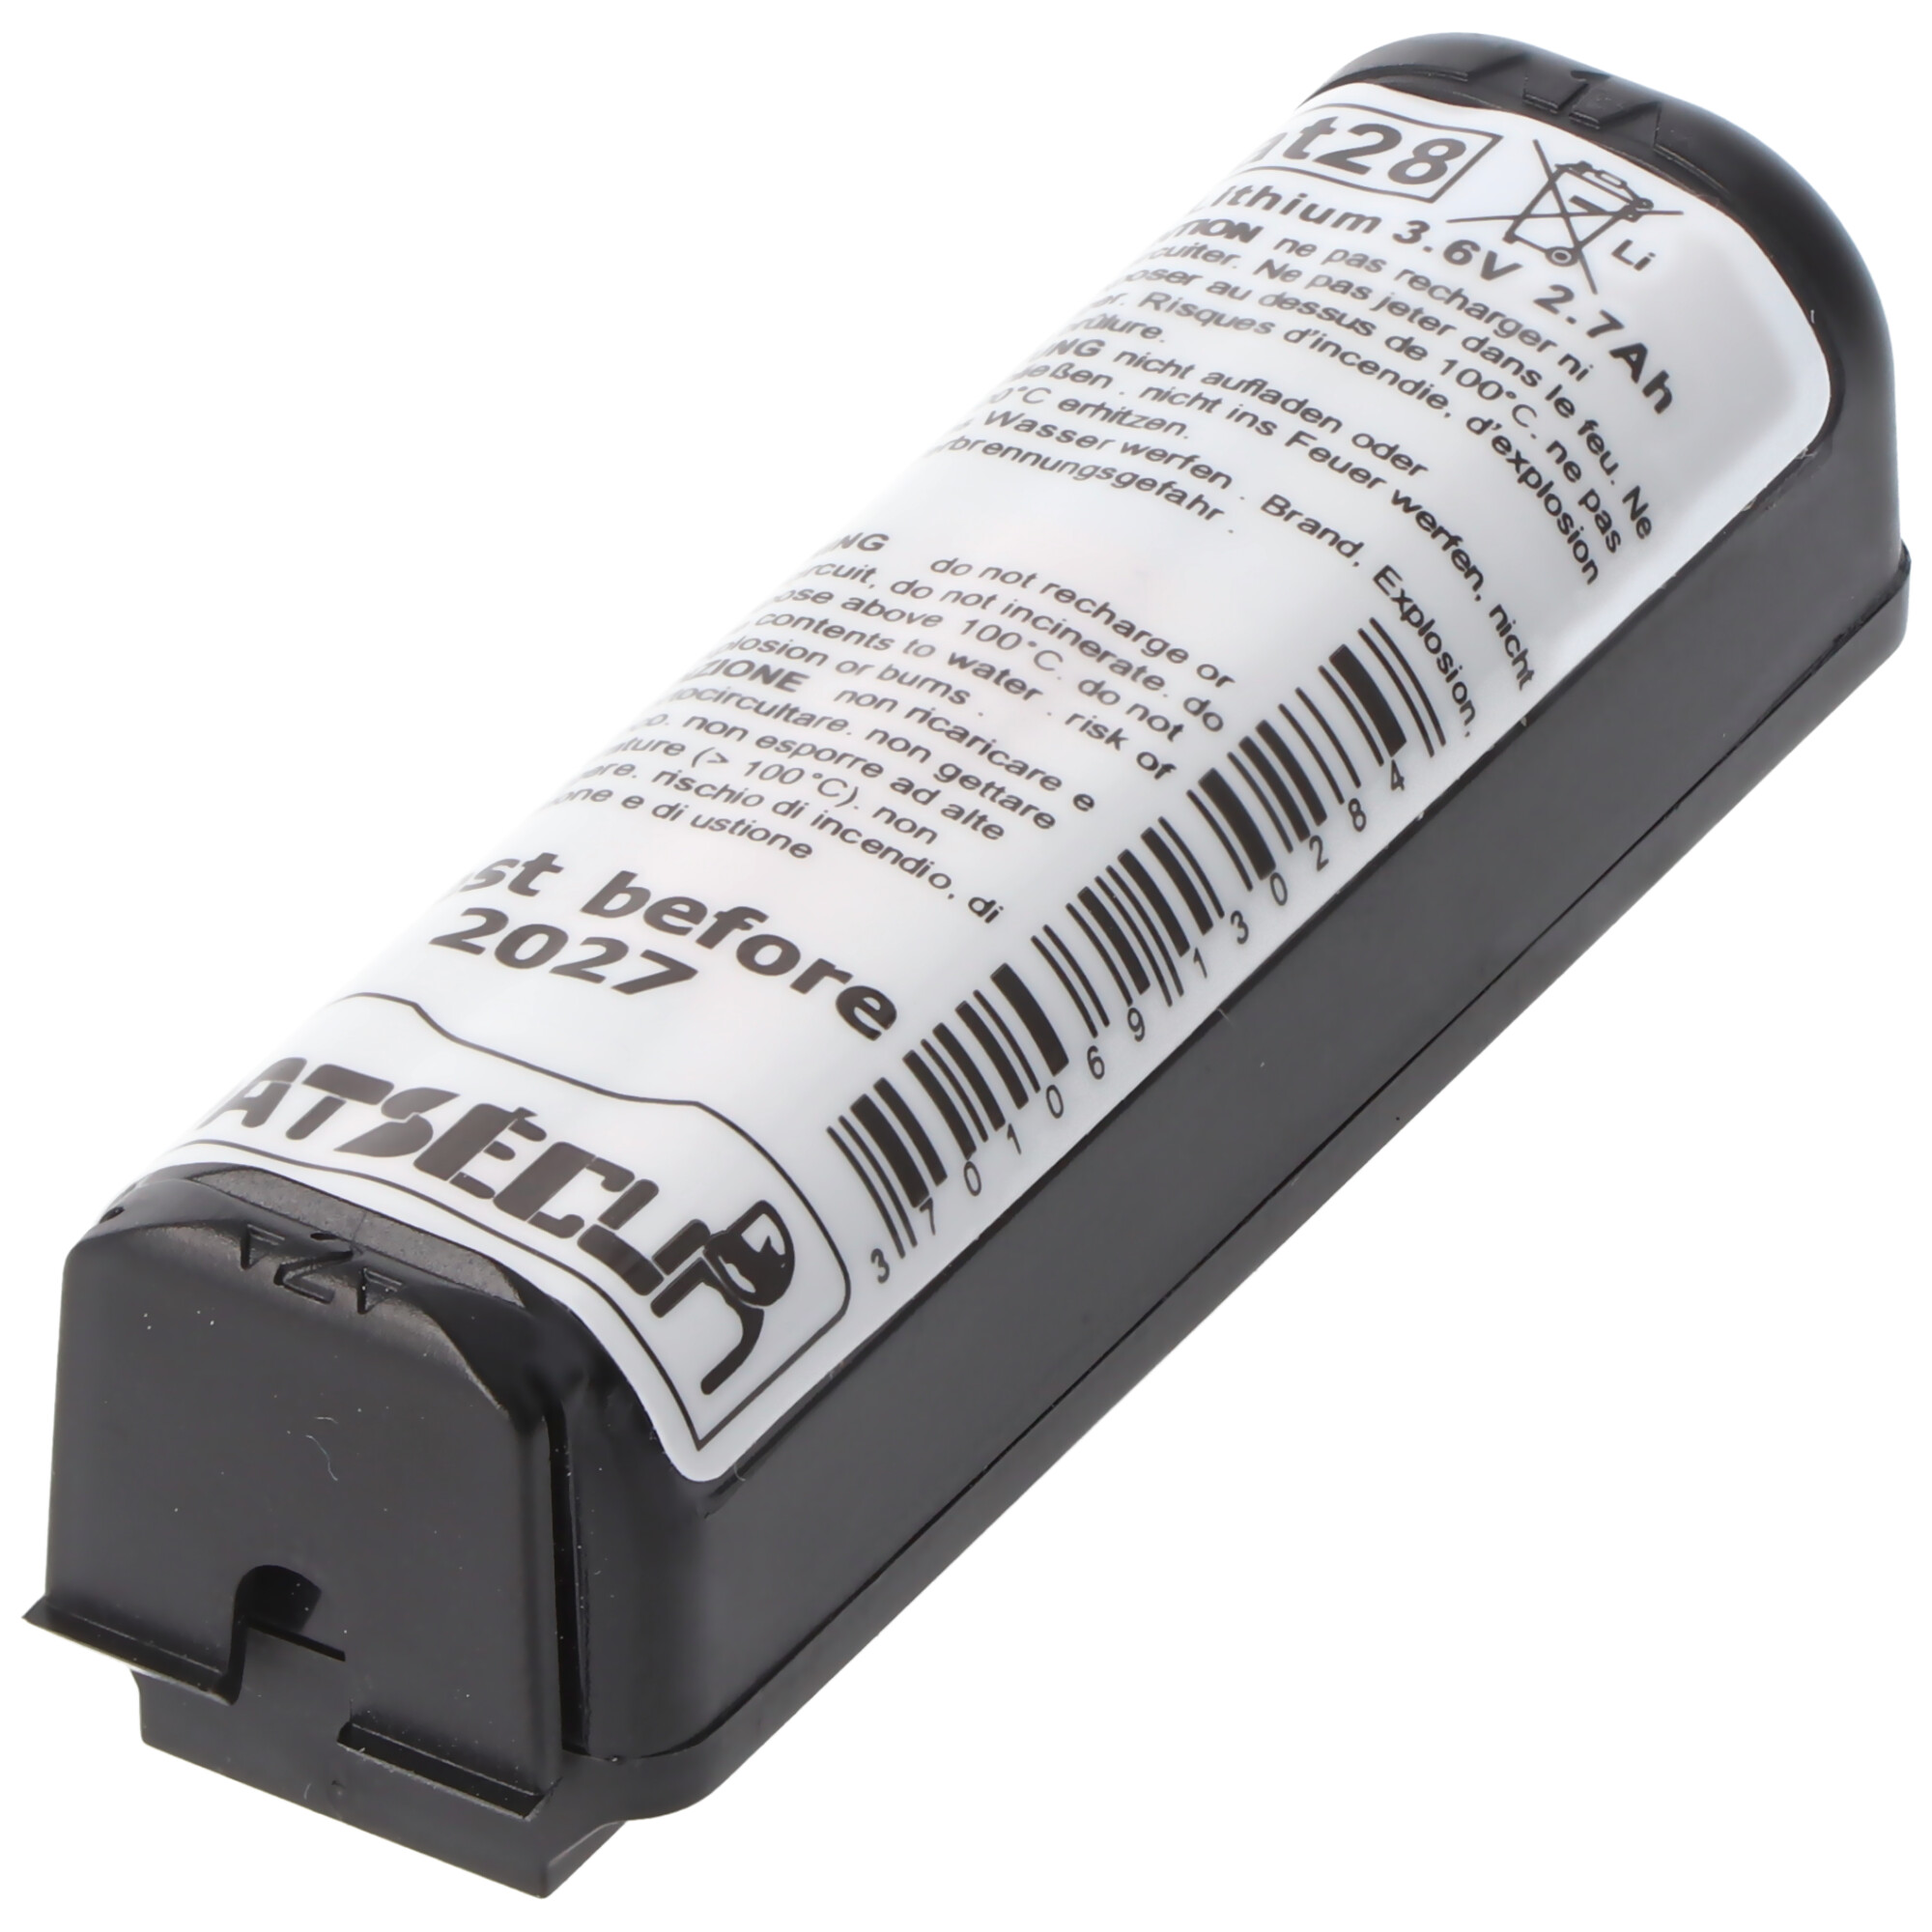 Batterie passend für den DAITEM BATLi28 Lithium battery 3,6 Volt 2000mAh